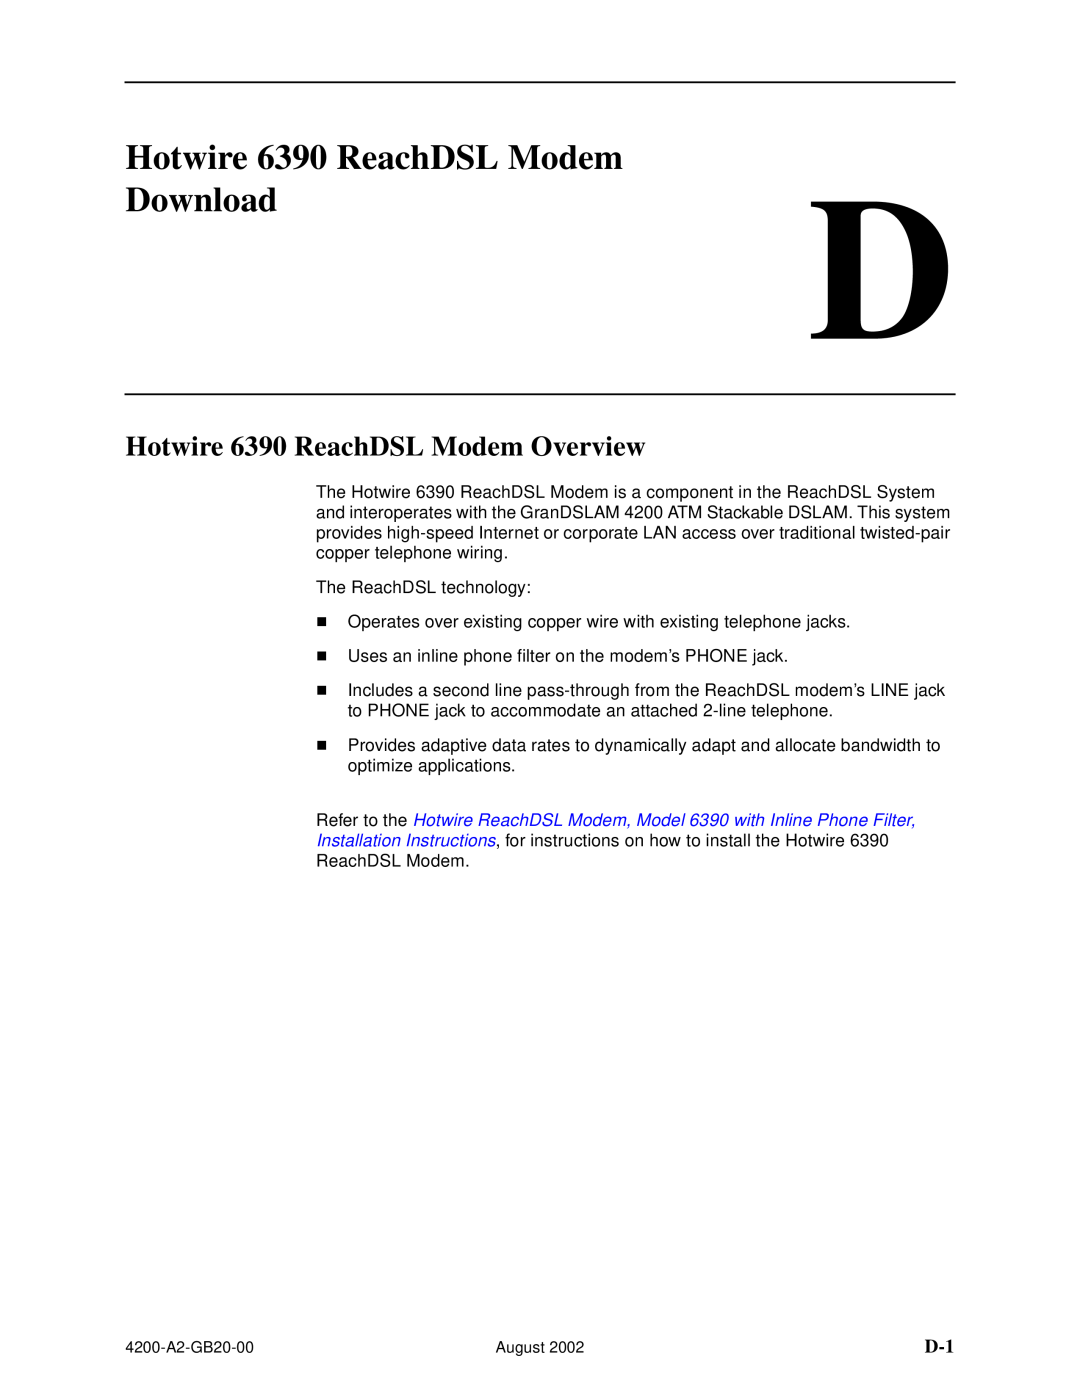 Paradyne 4200 manual Download, Hotwire 6390 ReachDSL Modem Overview 